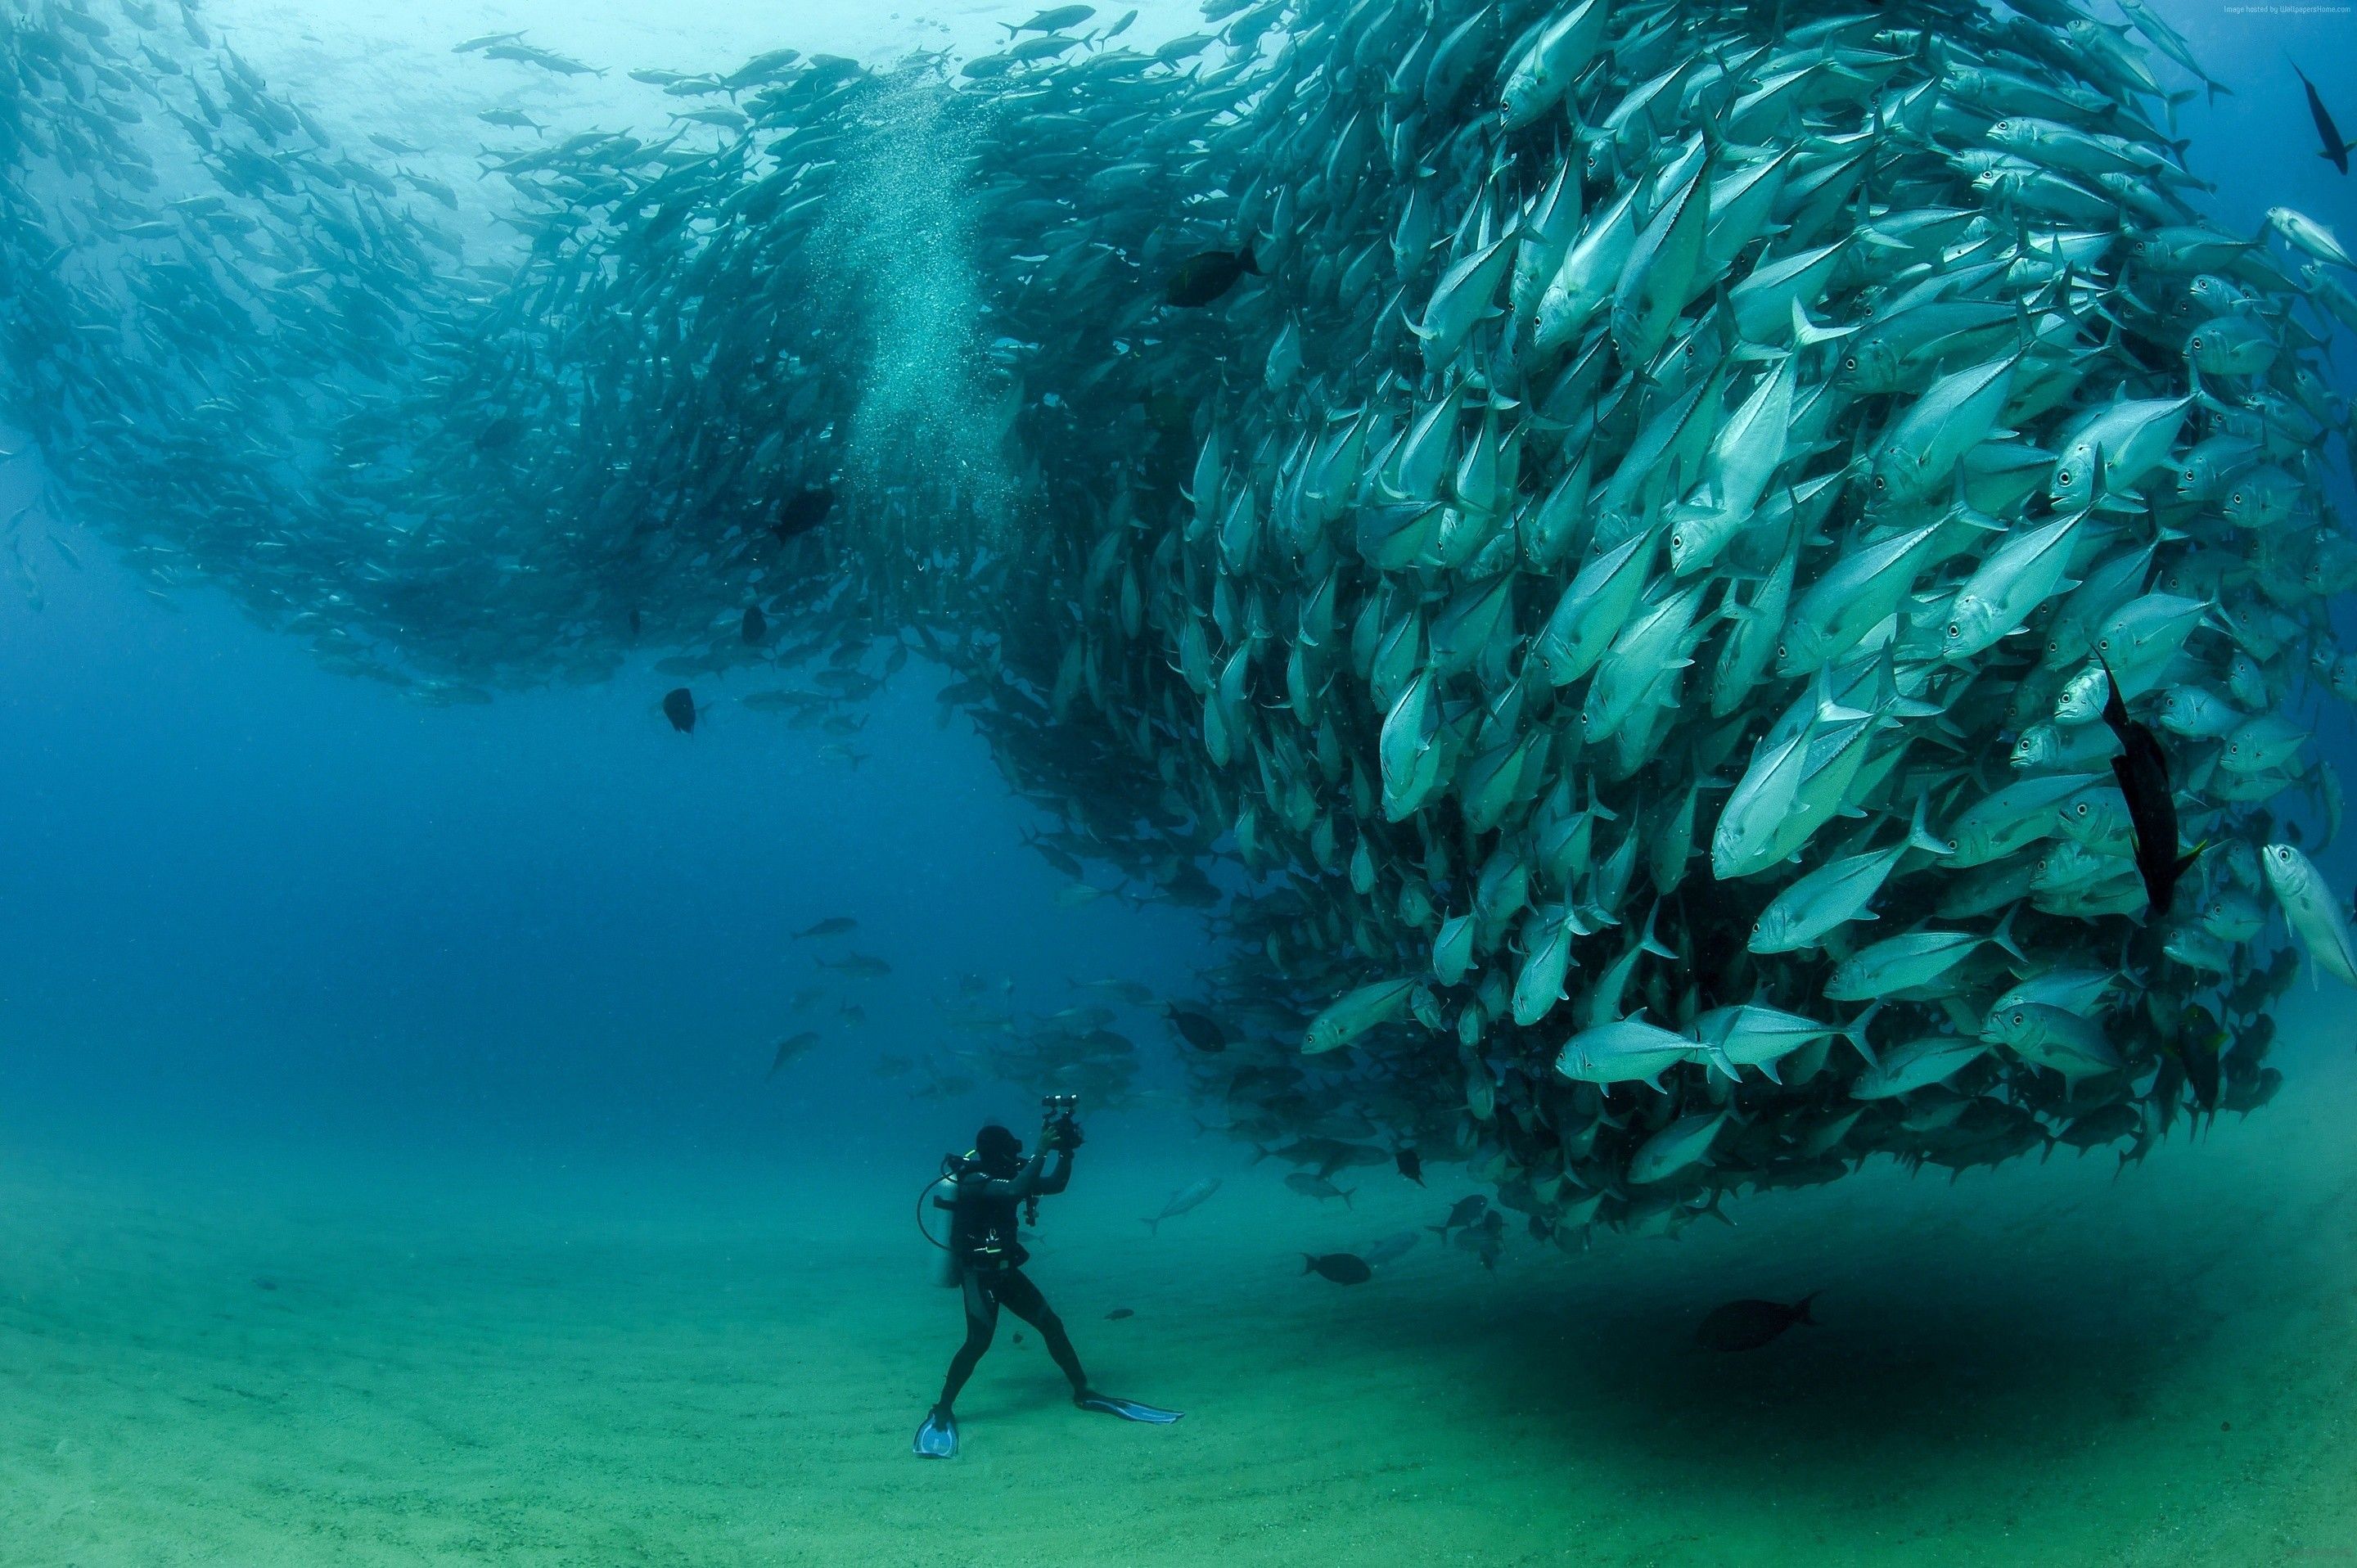 2880x Under Ocean Wallpaper 1080p Data Id 150564 Amazing Photo Of The World